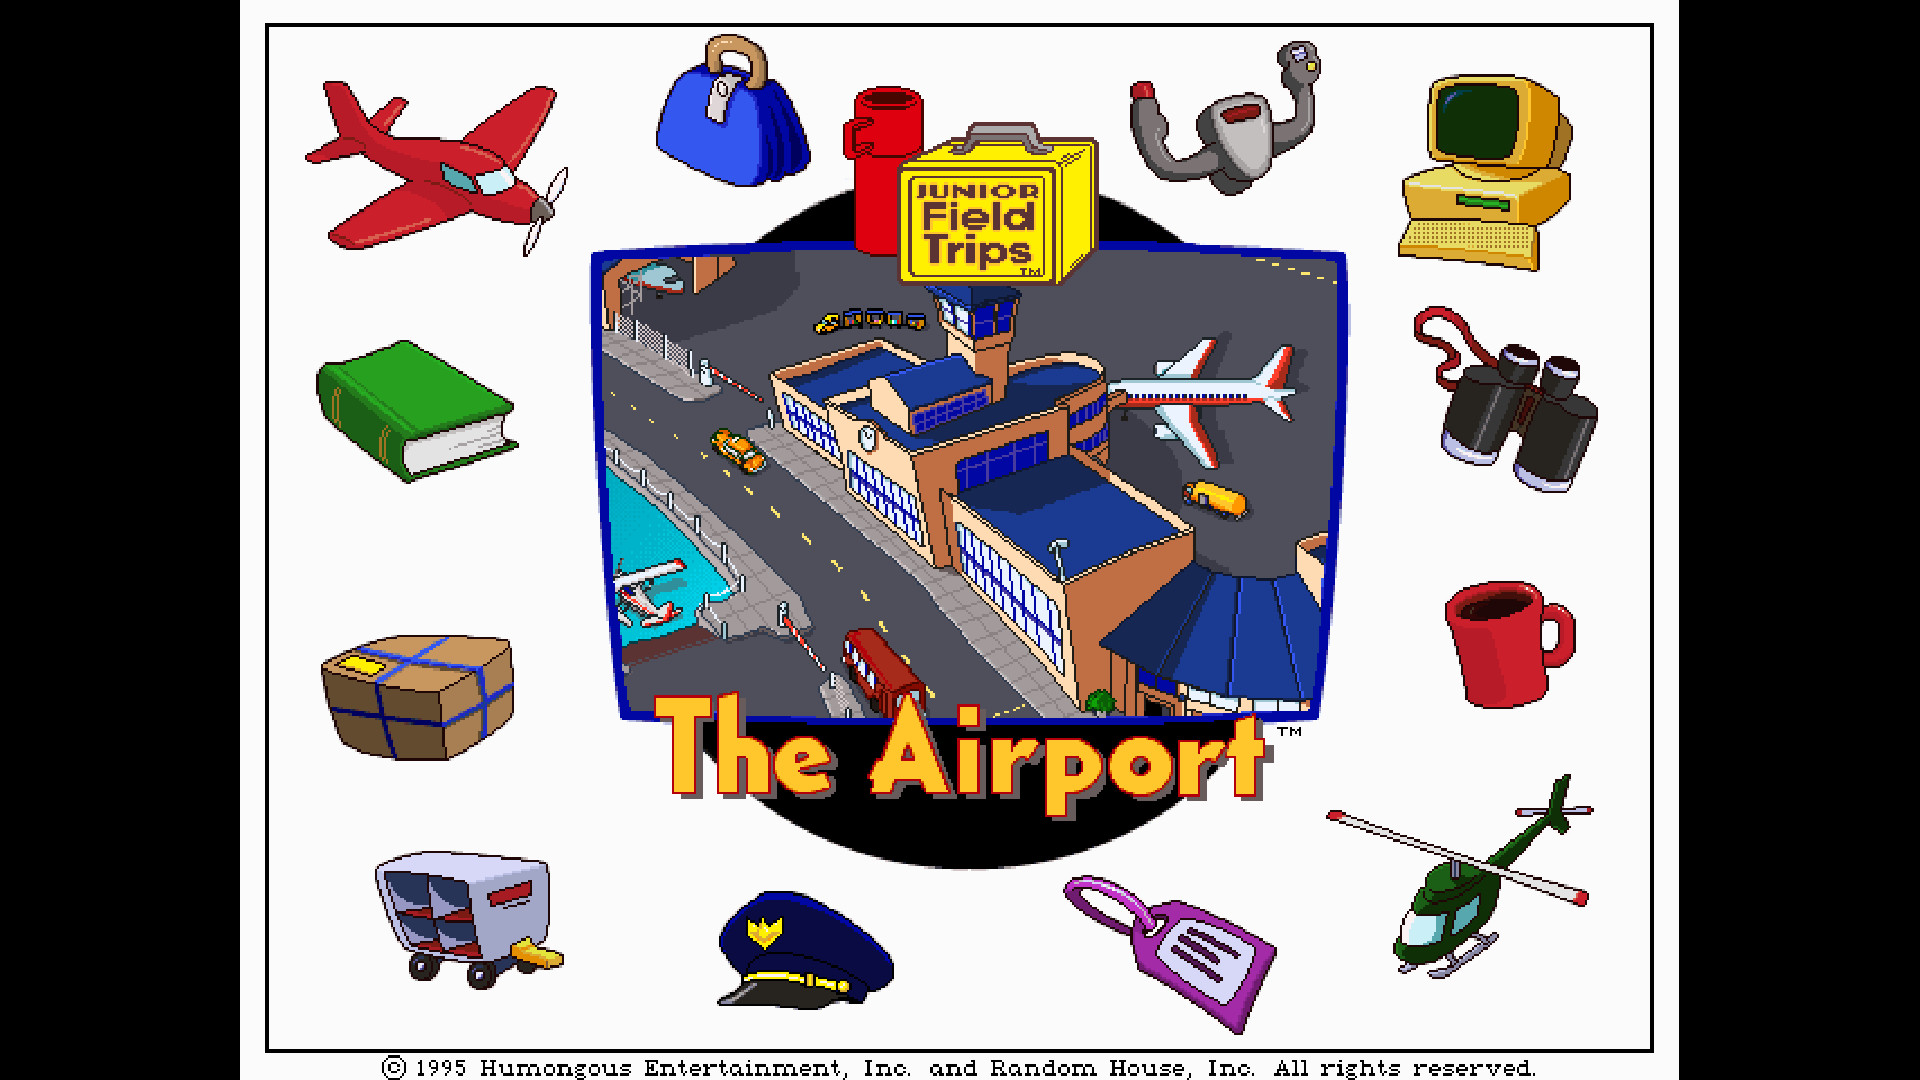 Let's Explore the Airport (Junior Field Trips) screenshot